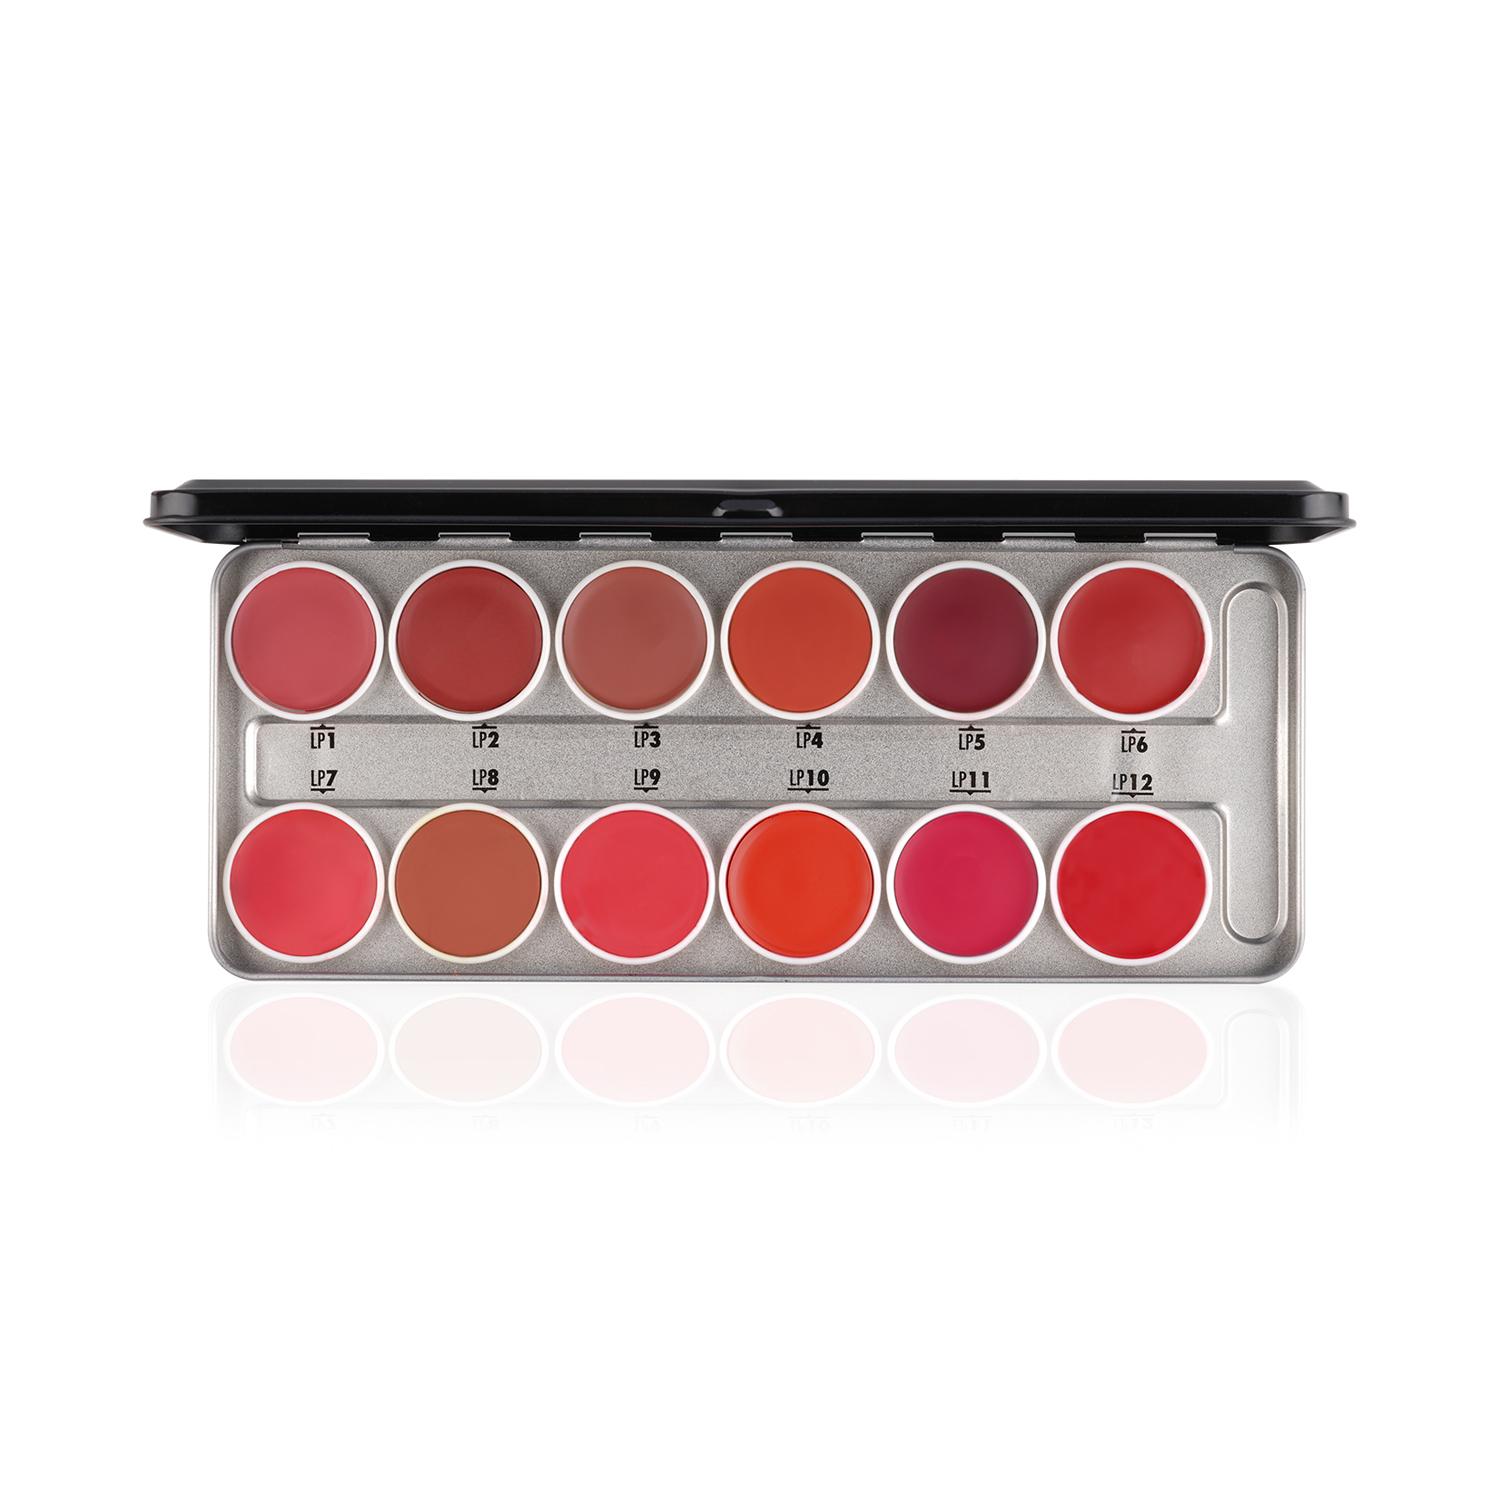 PAC | PAC Pro Lipstick Palette - X12 Shade (2.8g)